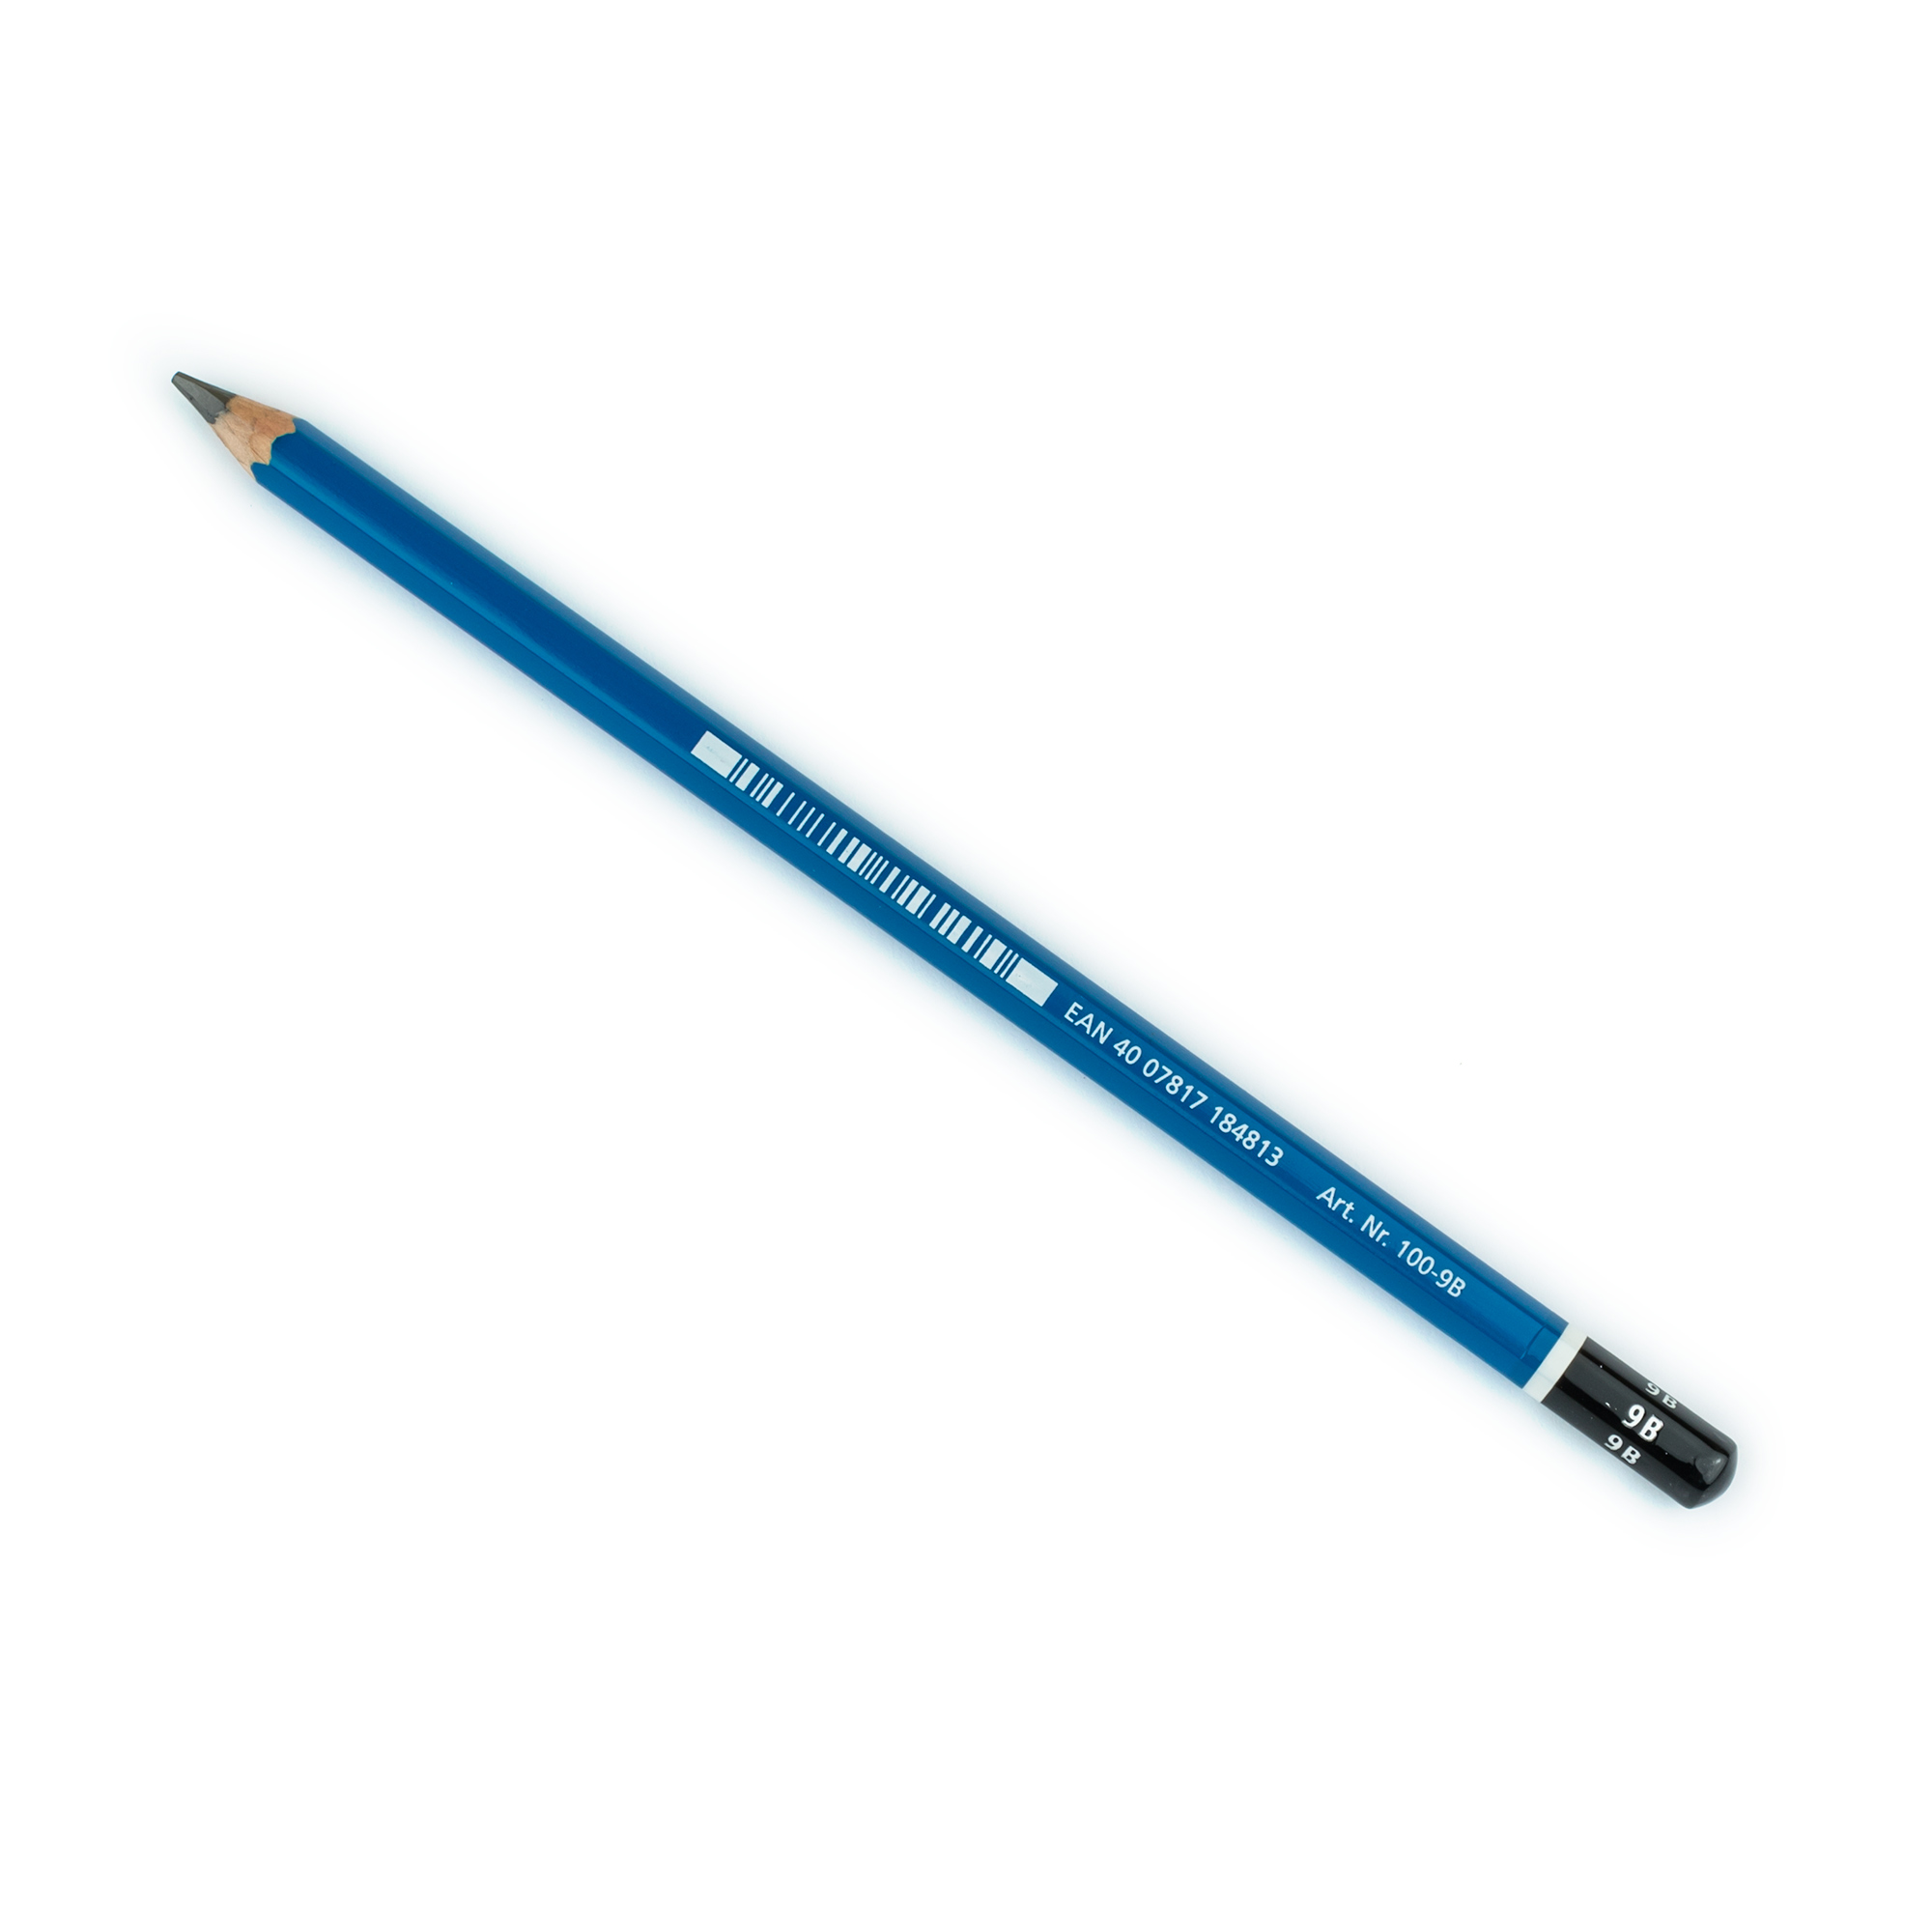 Staedtler Mars Lumograph 100 9B pencil - scribe.market